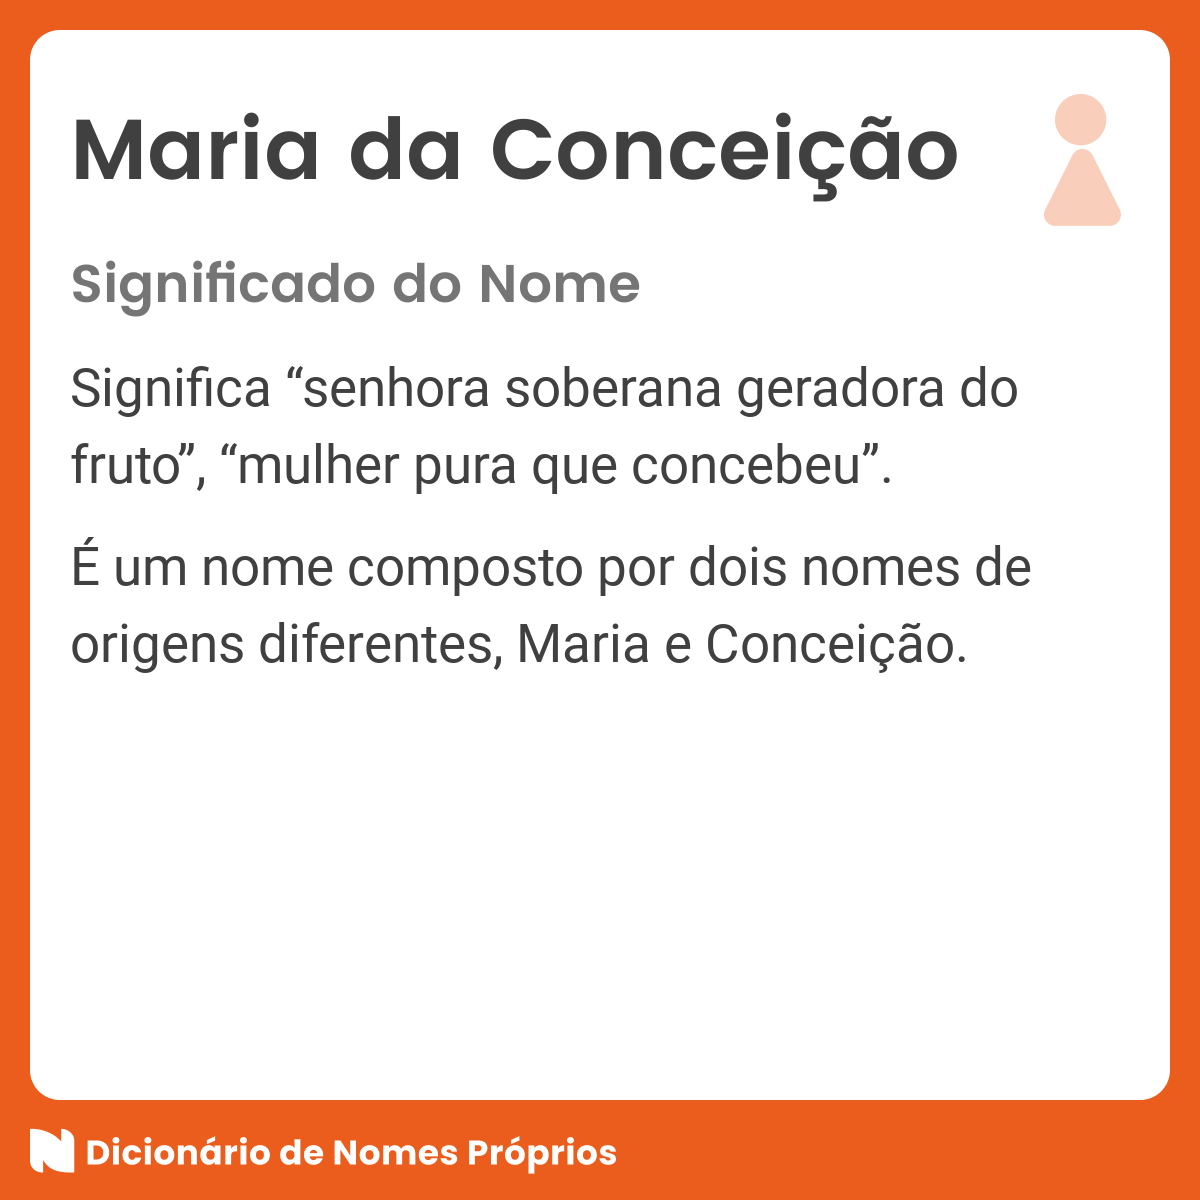 https://static.dicionariodenomesproprios.com.br/upload/facebook/m/maria-da-conceicao-1x1.png